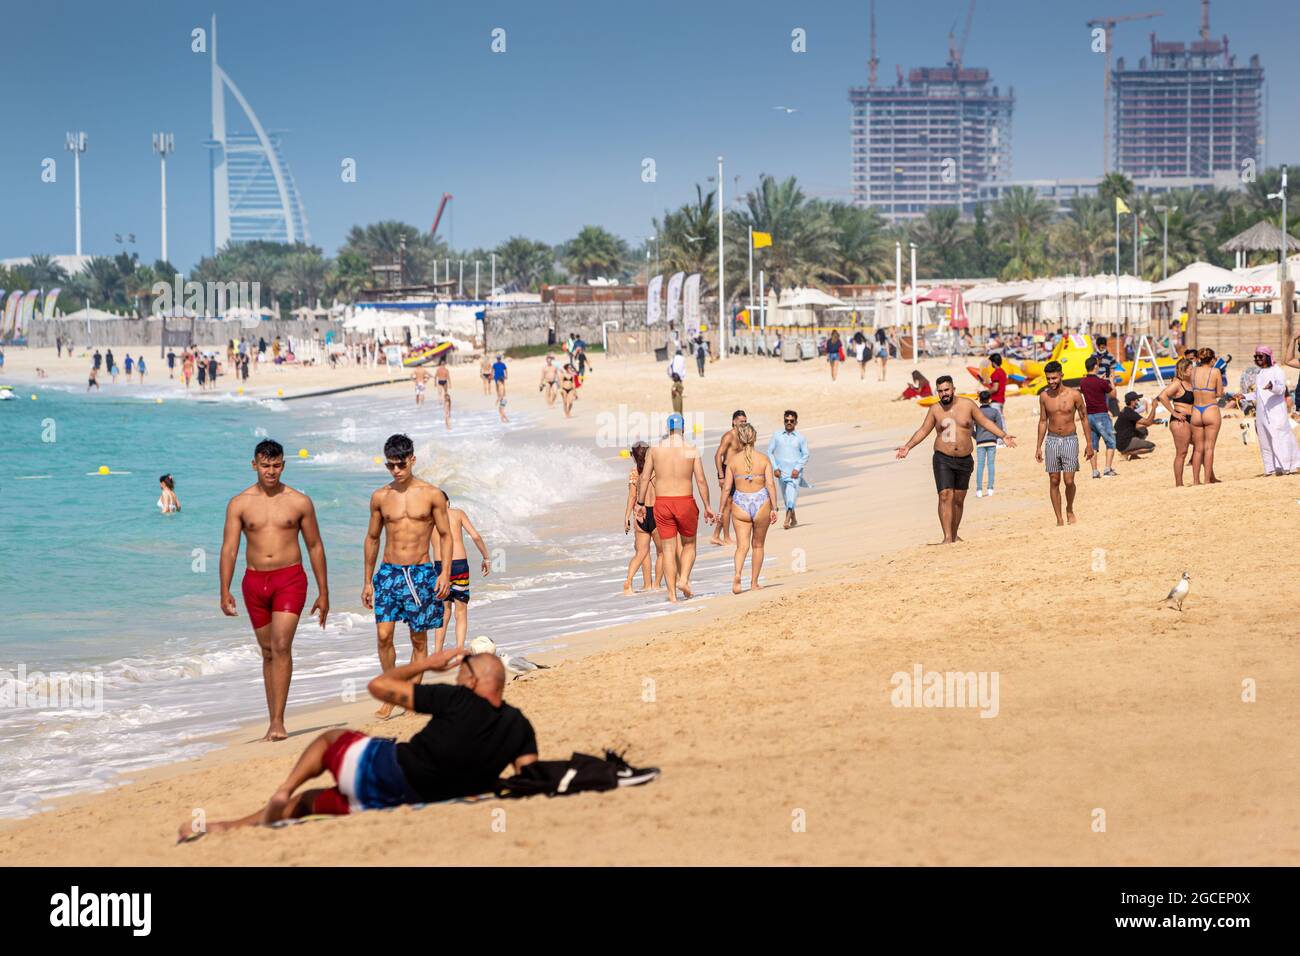 22 February 2021, Dubai, UAE: Crowds of people walk along the sandy beach of Jbr or Jumeirah Beach Residence. Vacationers swim and sunbathe Stock Photo